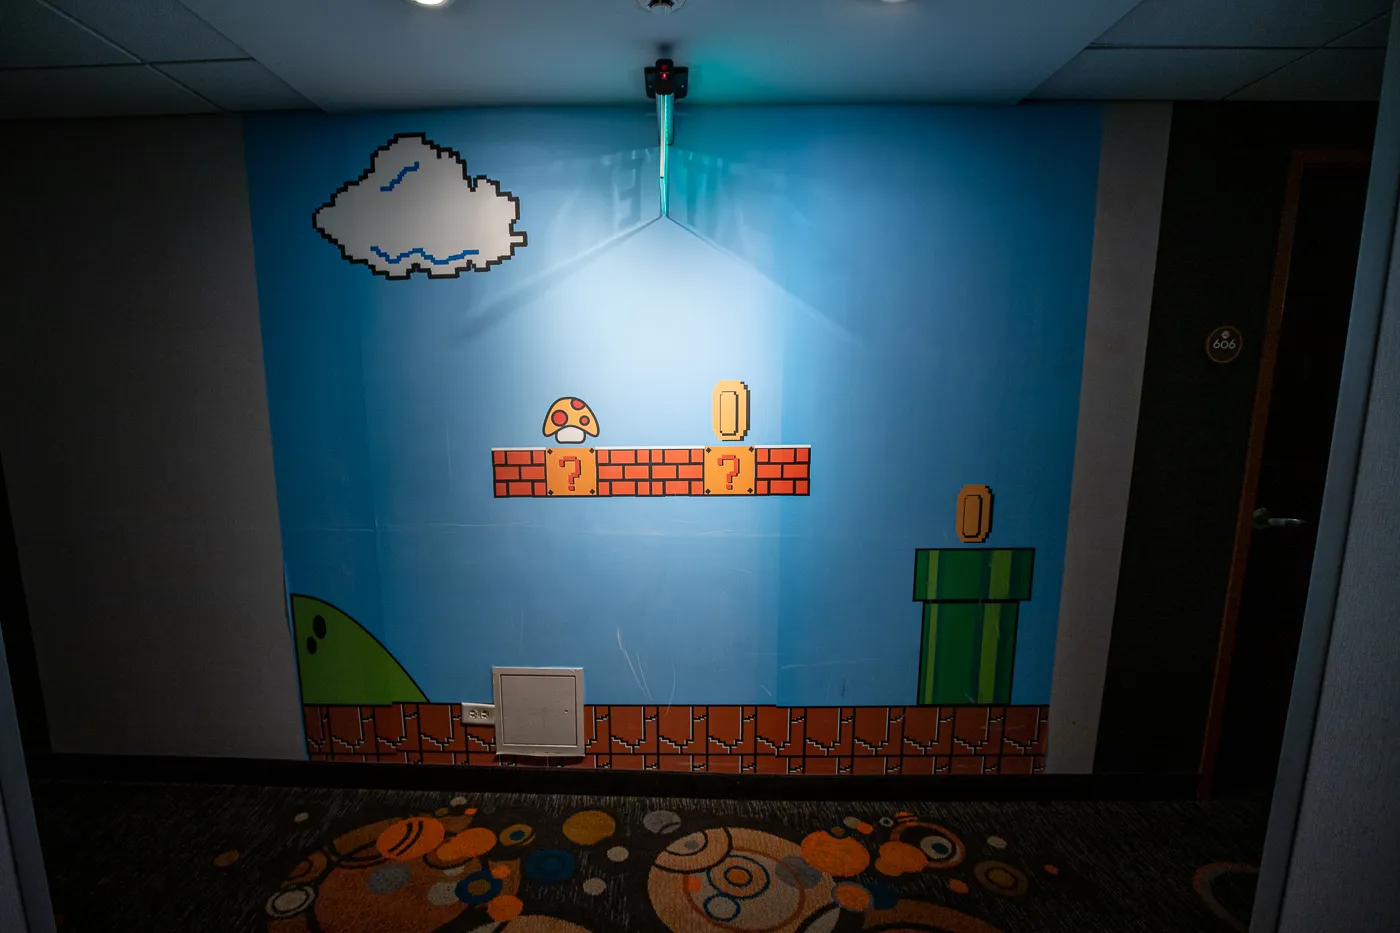 Super Mario Bros mural at The Curtis Hotel - a Themed Hotel in Denver, Colorado